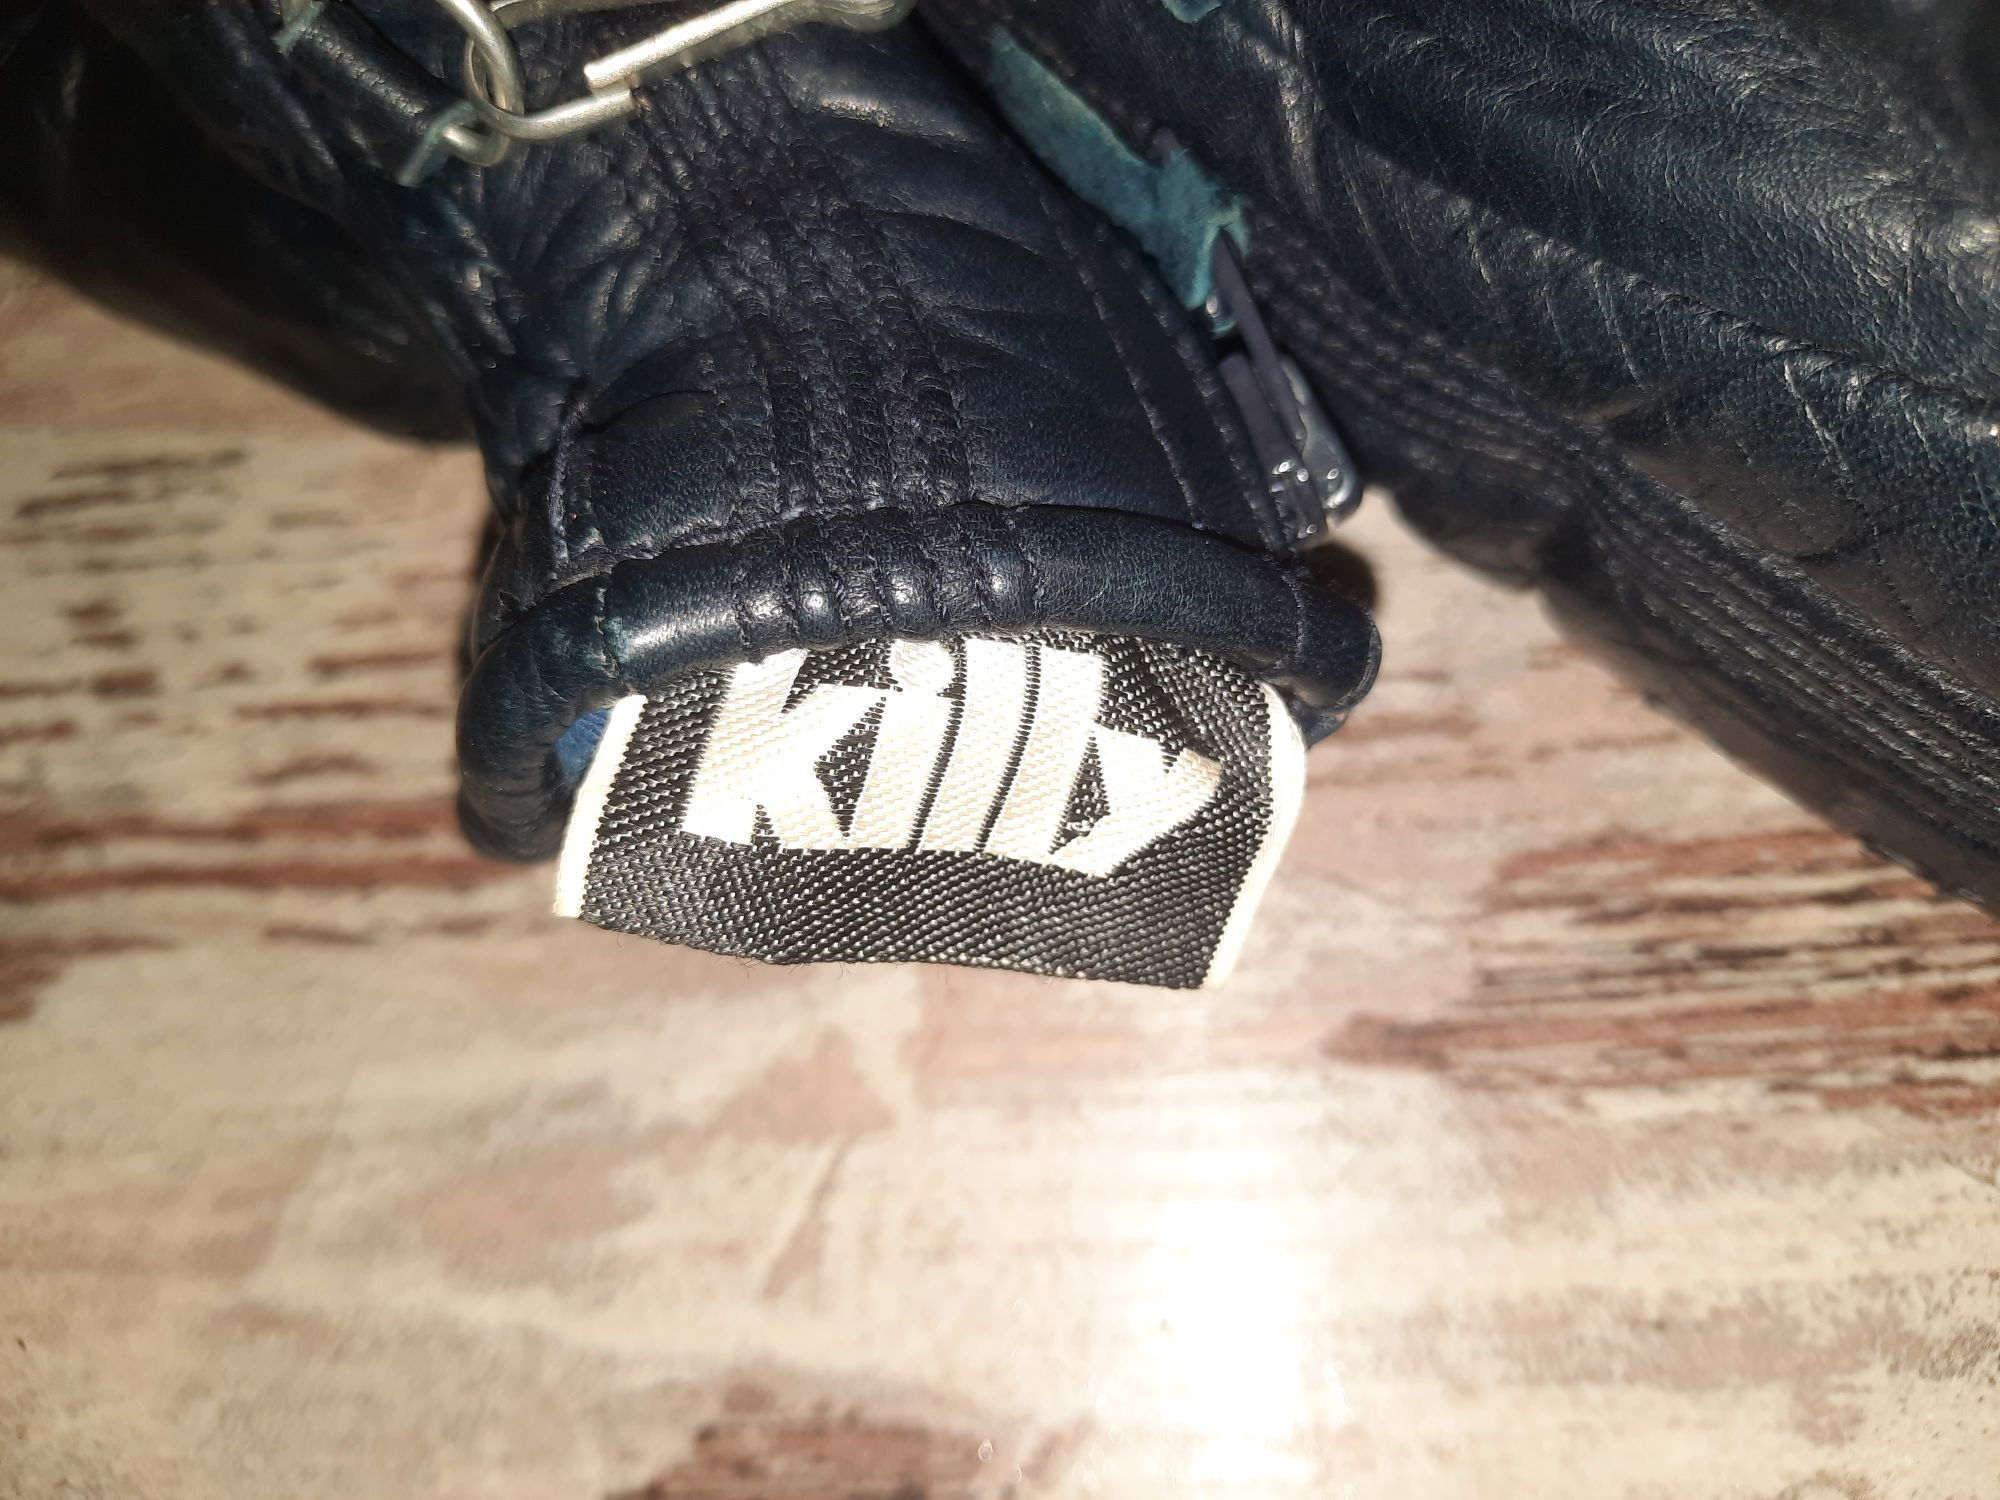 Руковички бренду - Killy